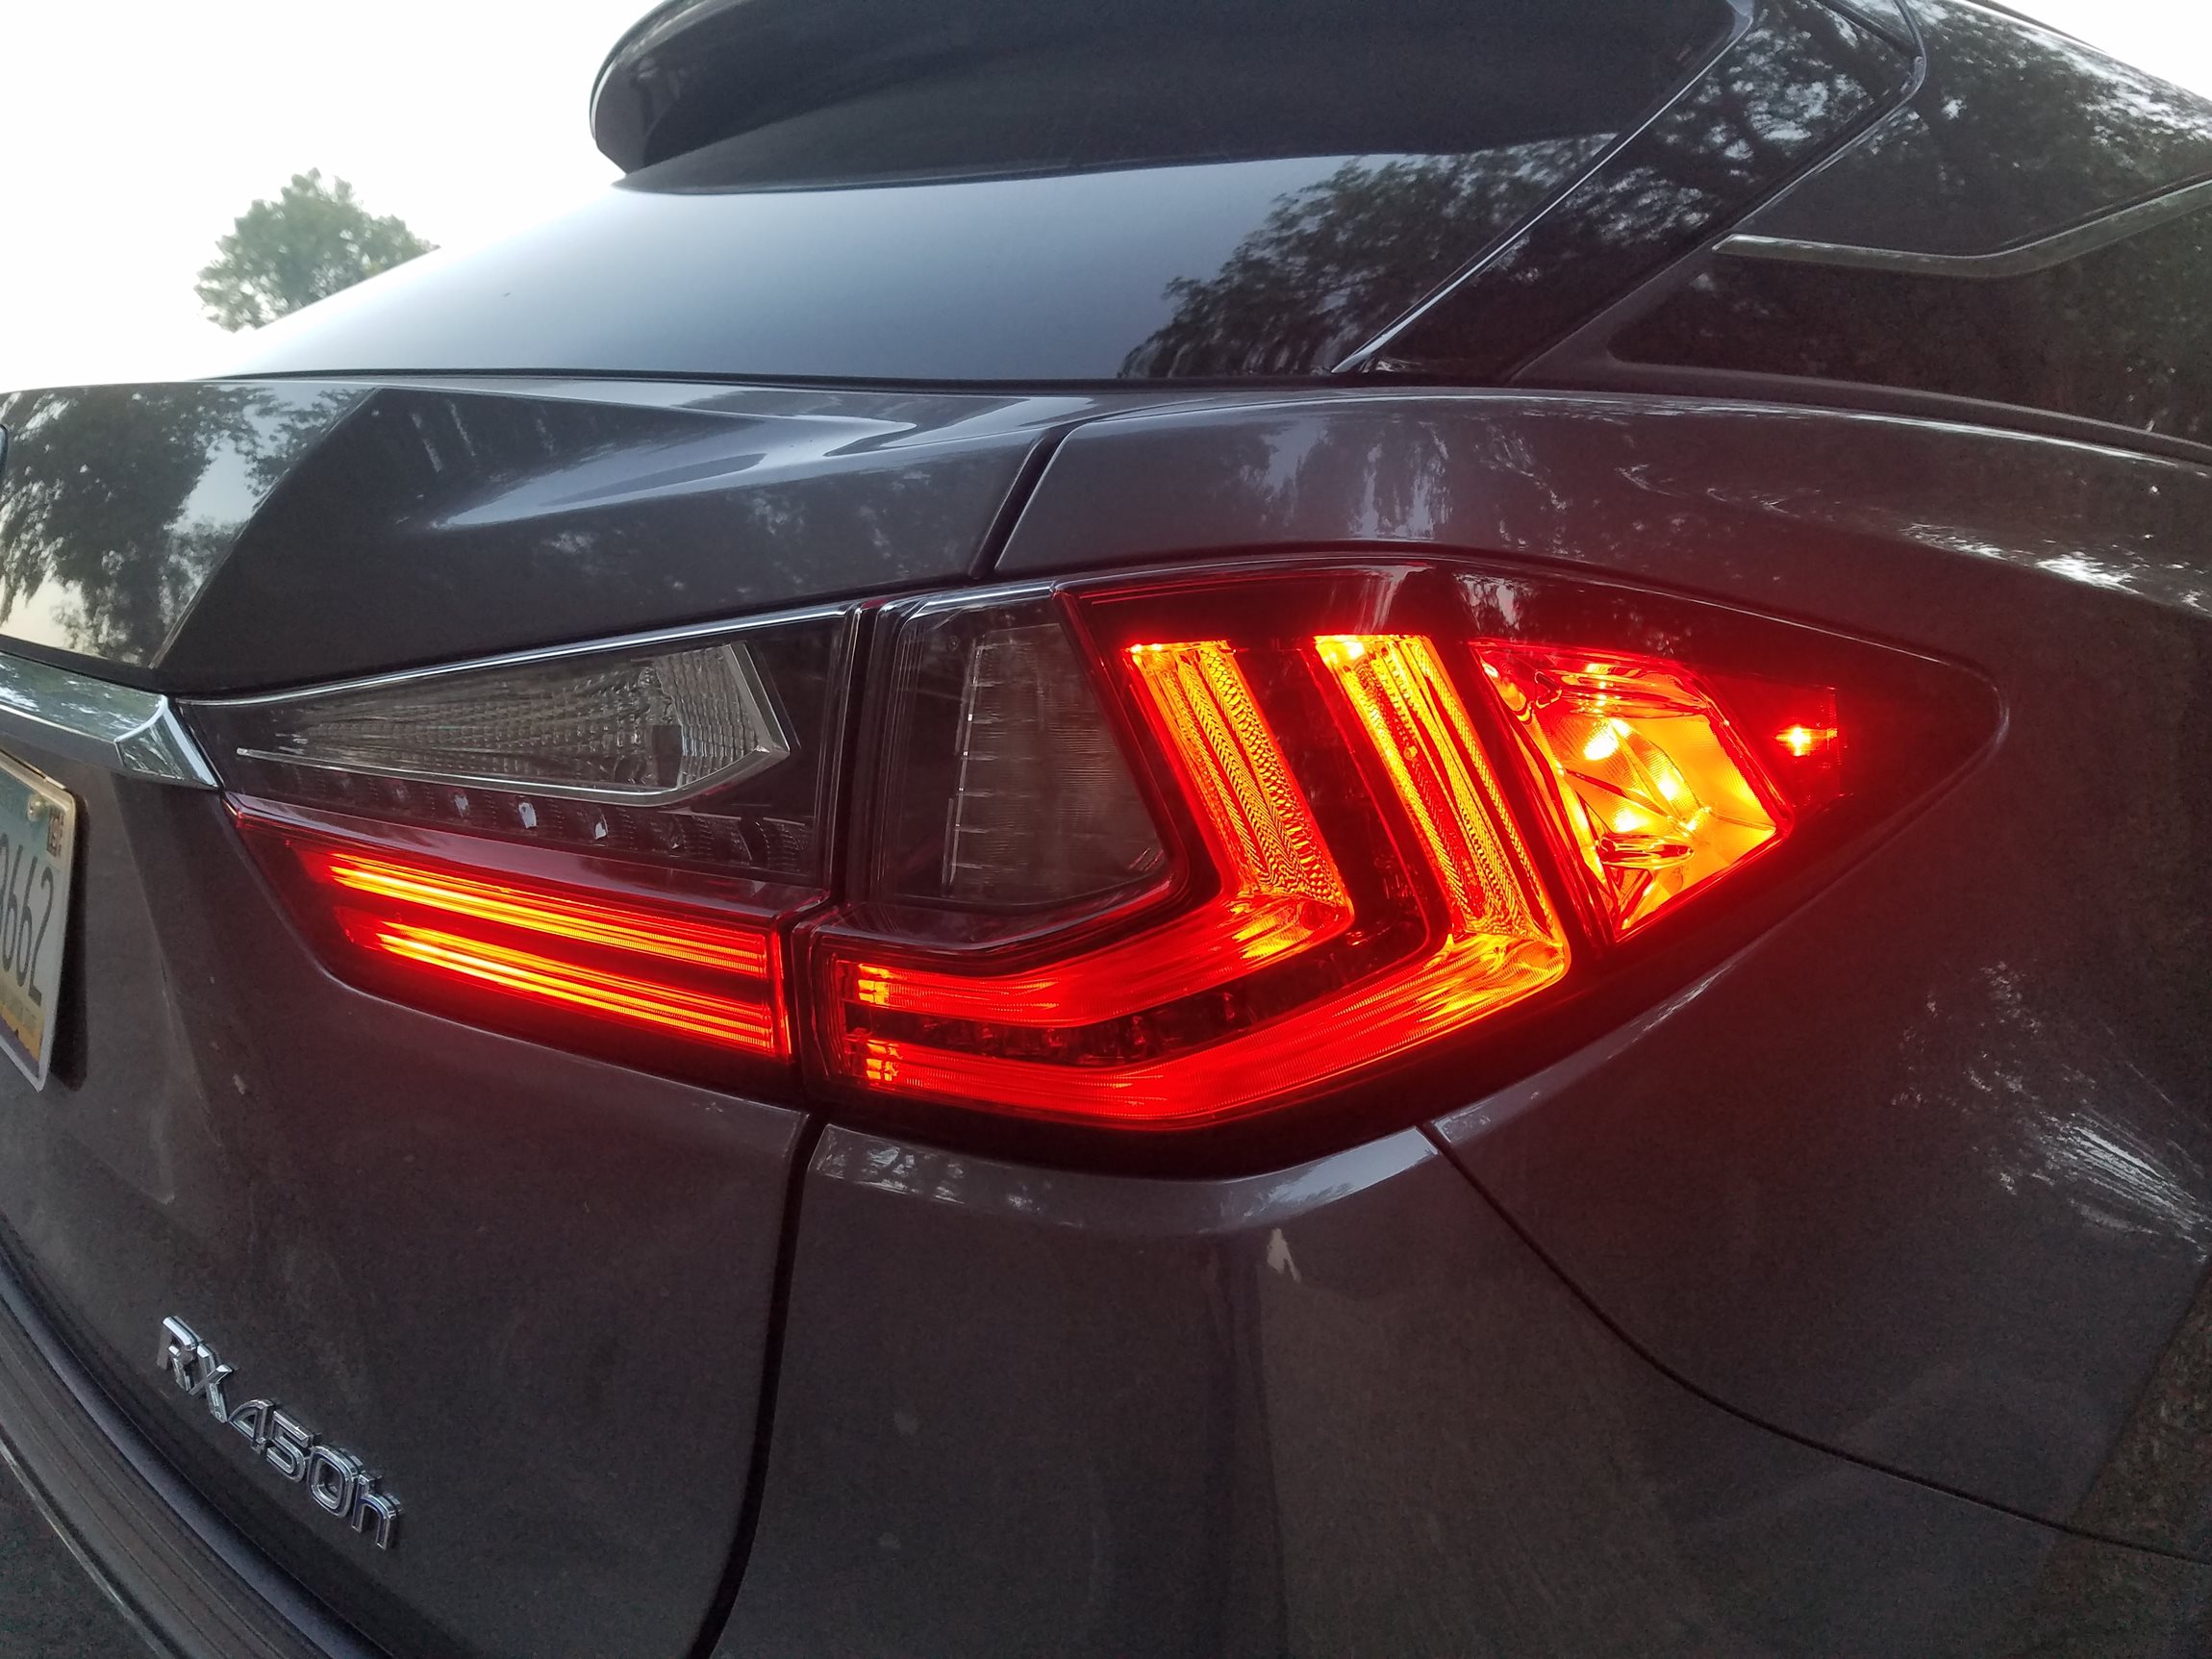 2018 Lexus RX450h - Road Test Review - By Matt Barnes » CAR SHOPPING